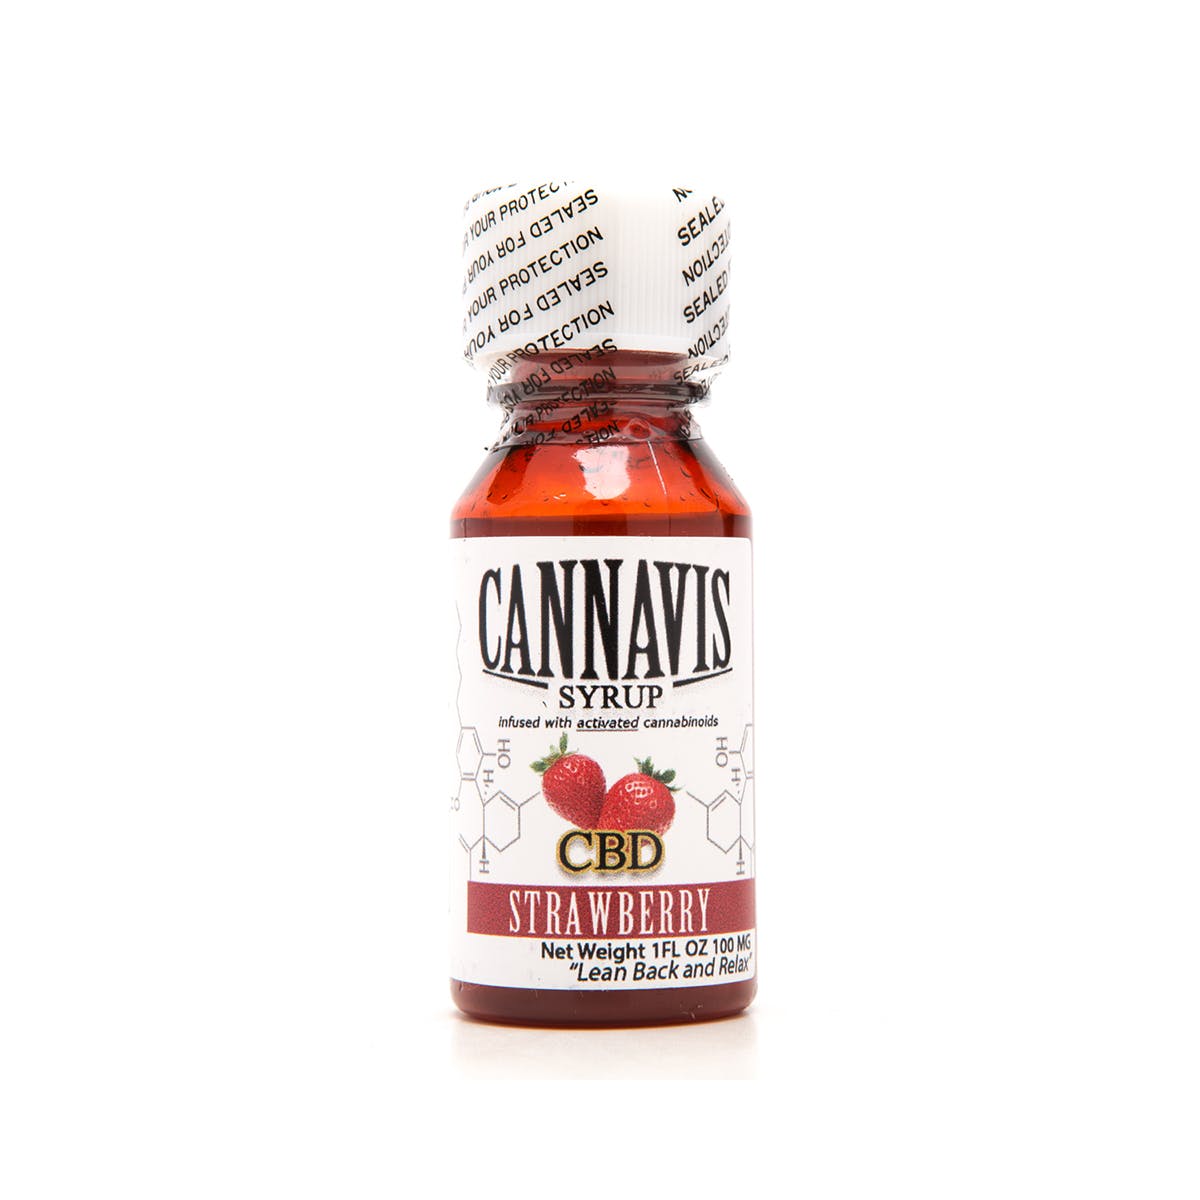 marijuana-dispensaries-papas-a-bud-in-covina-cannavis-syrup-2c-cbd-strawberry-100mg